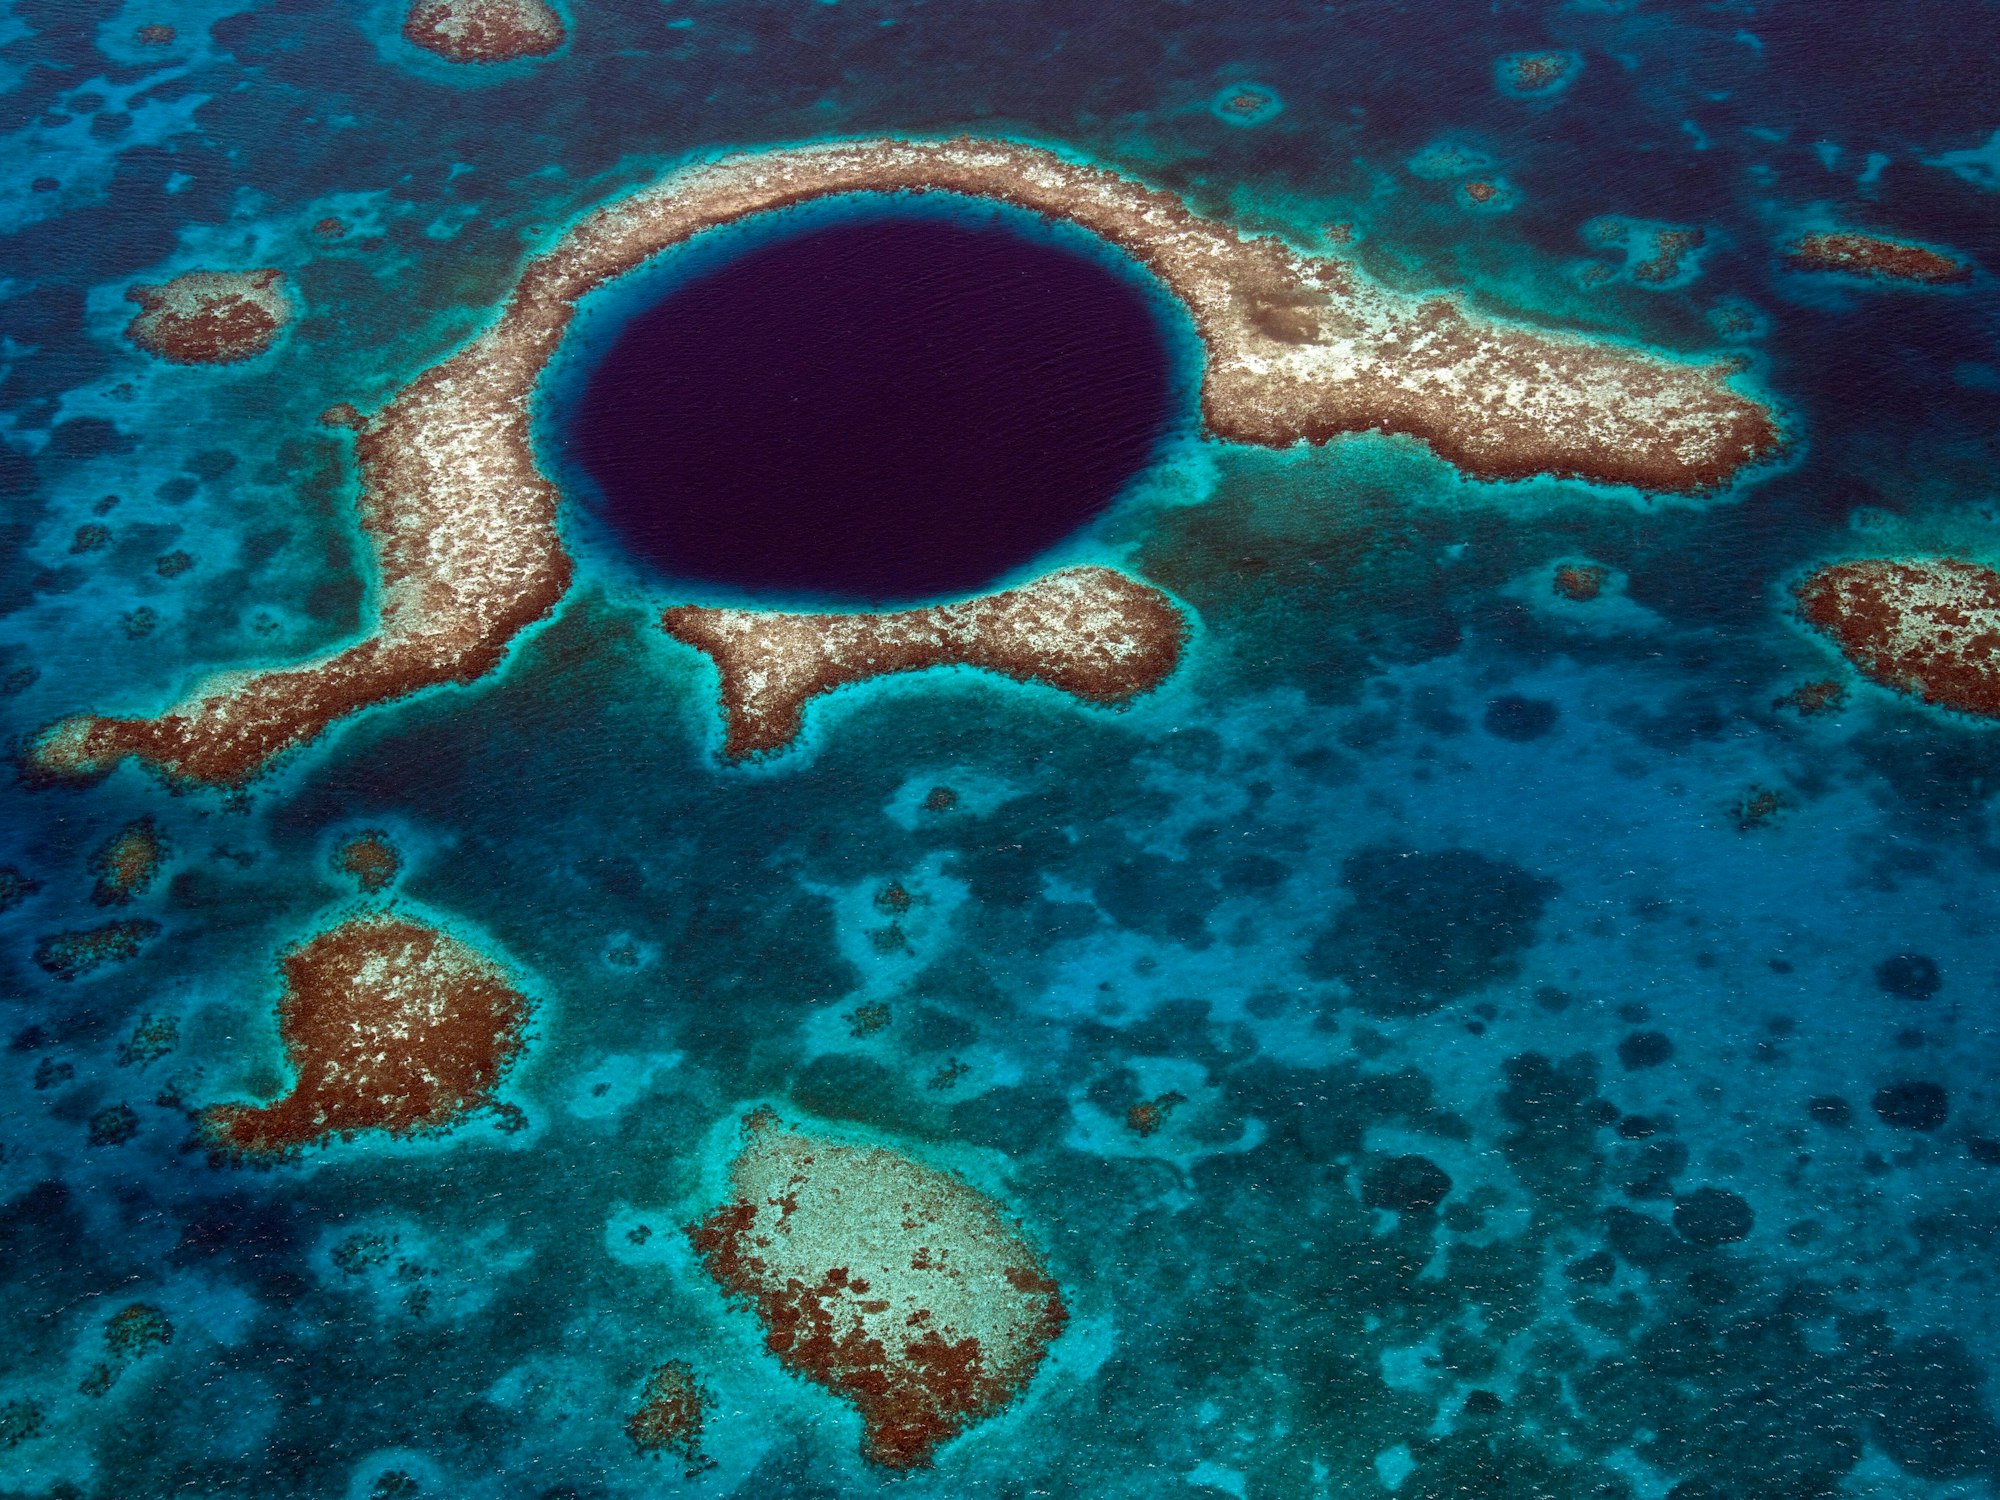 Das große blaue Loch in Belize.